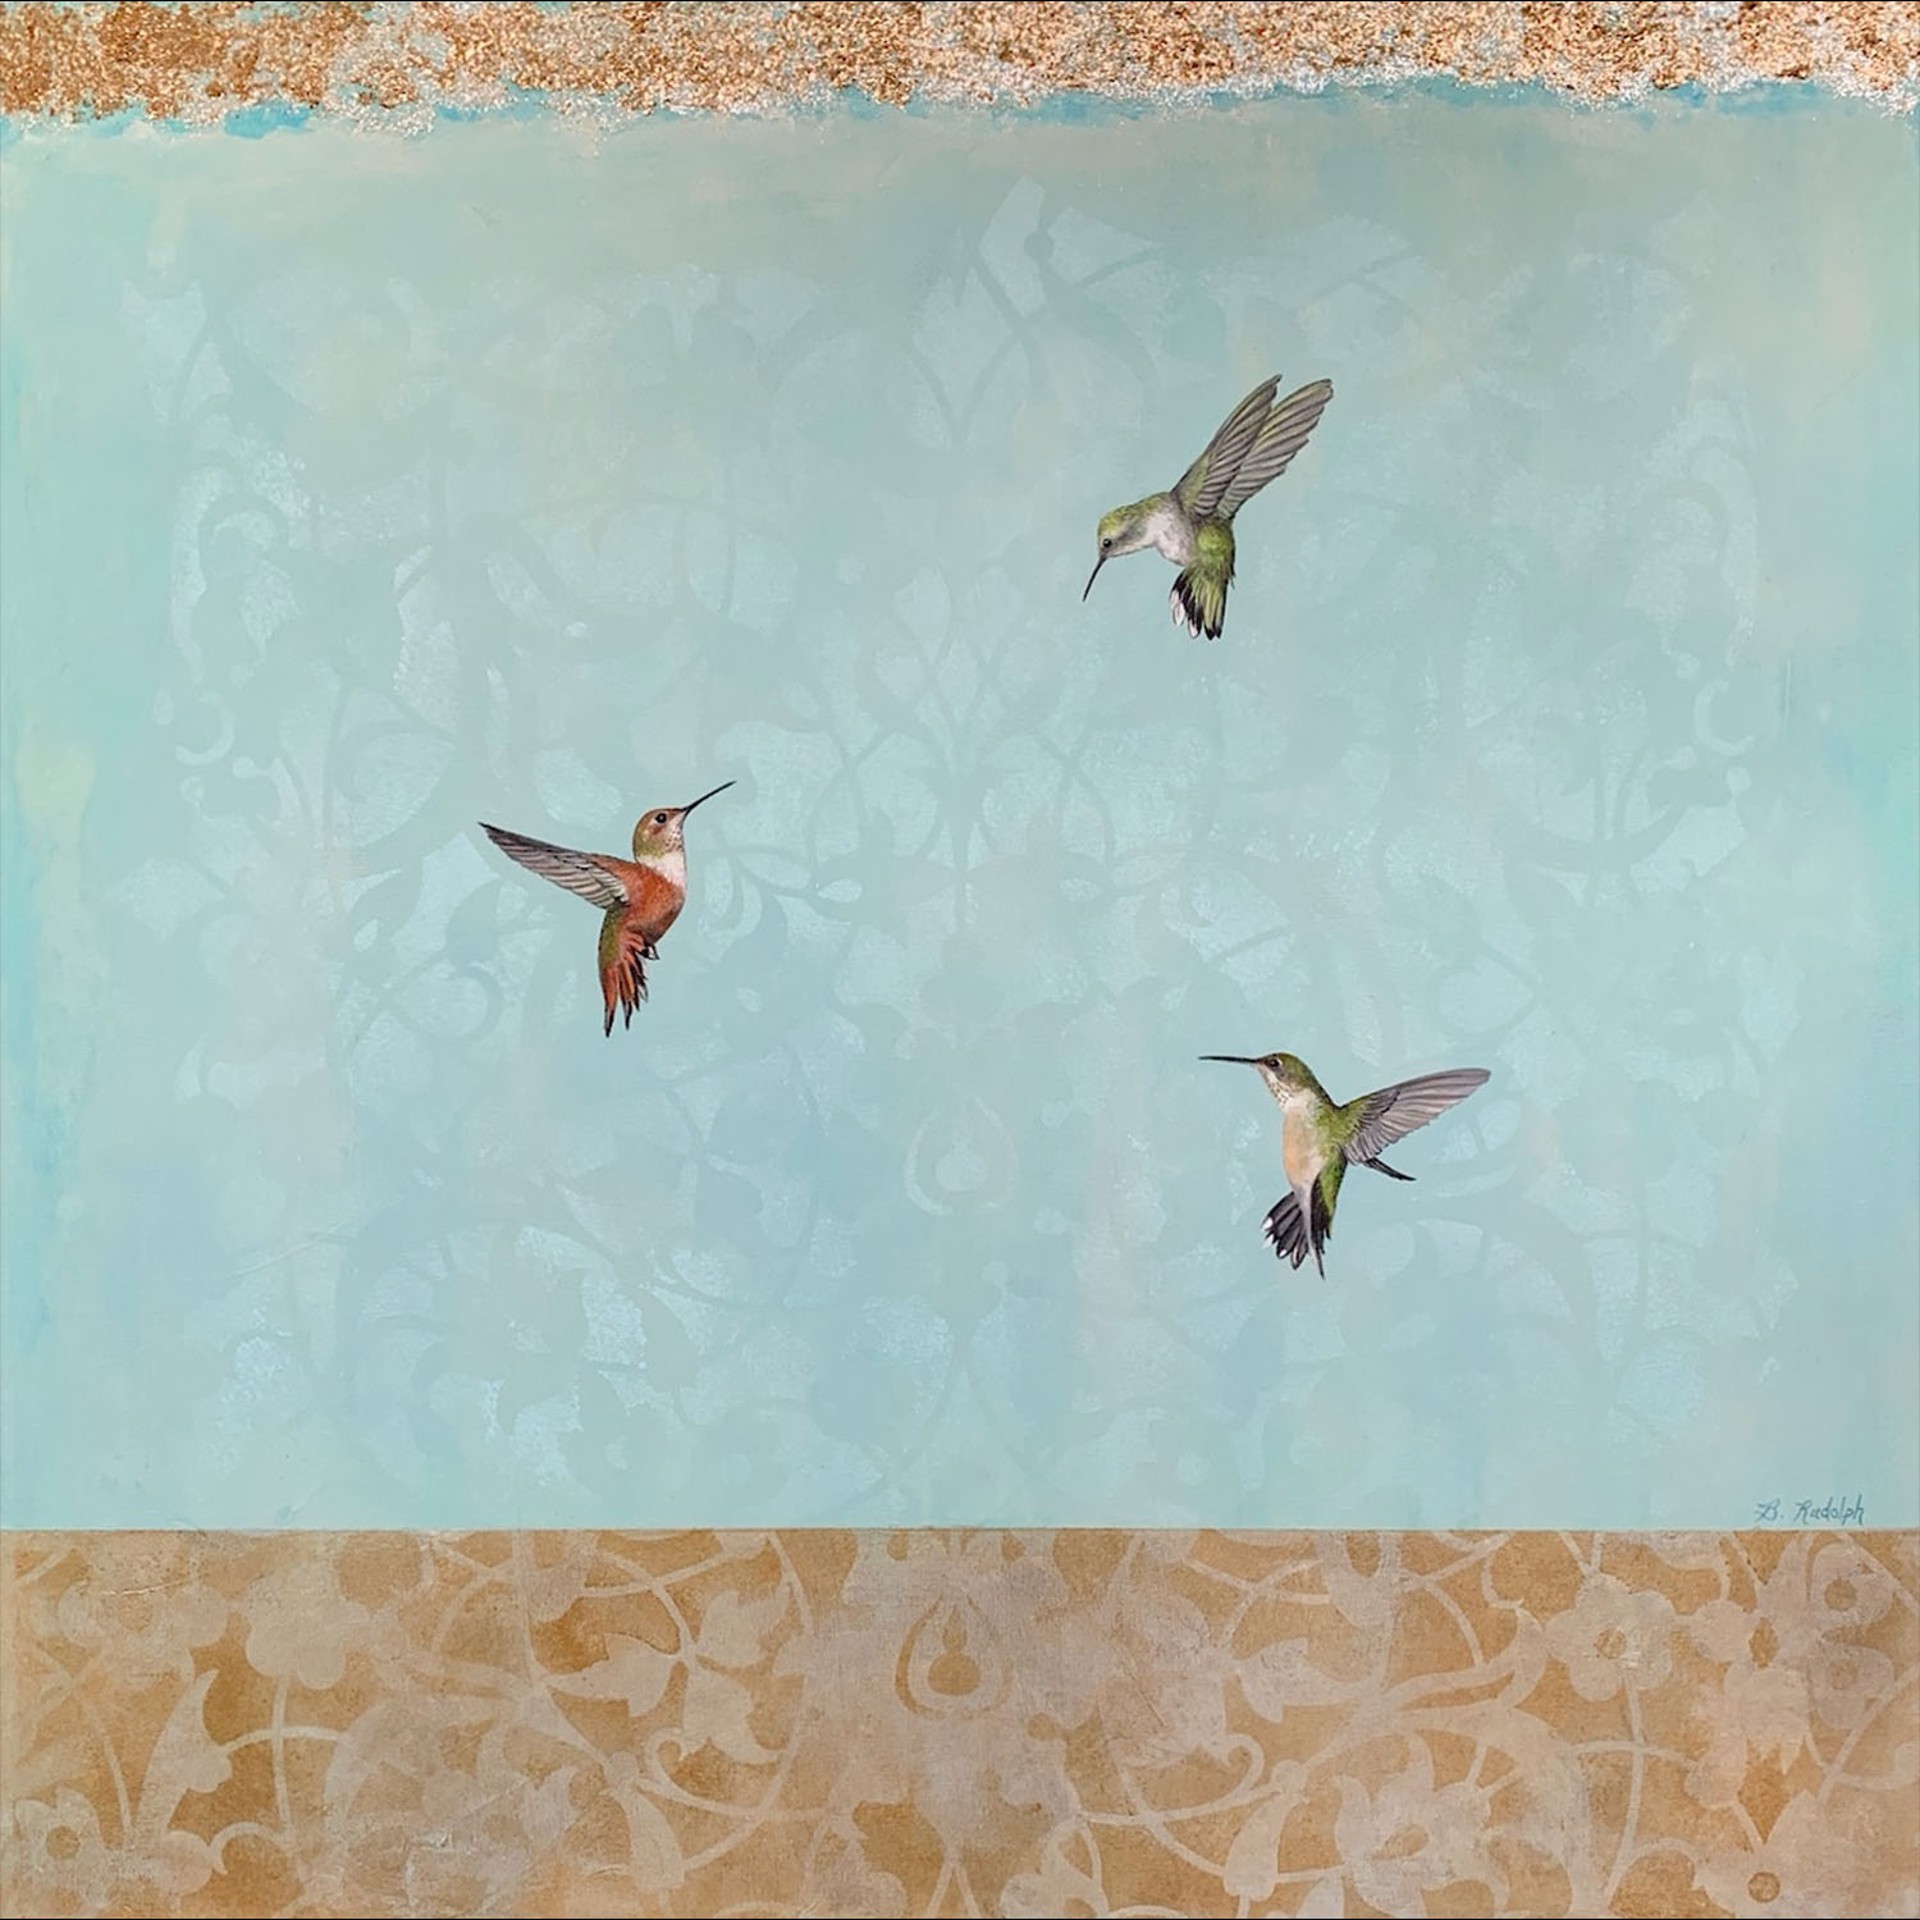 Fanciful Flight by Barbara Rudolph